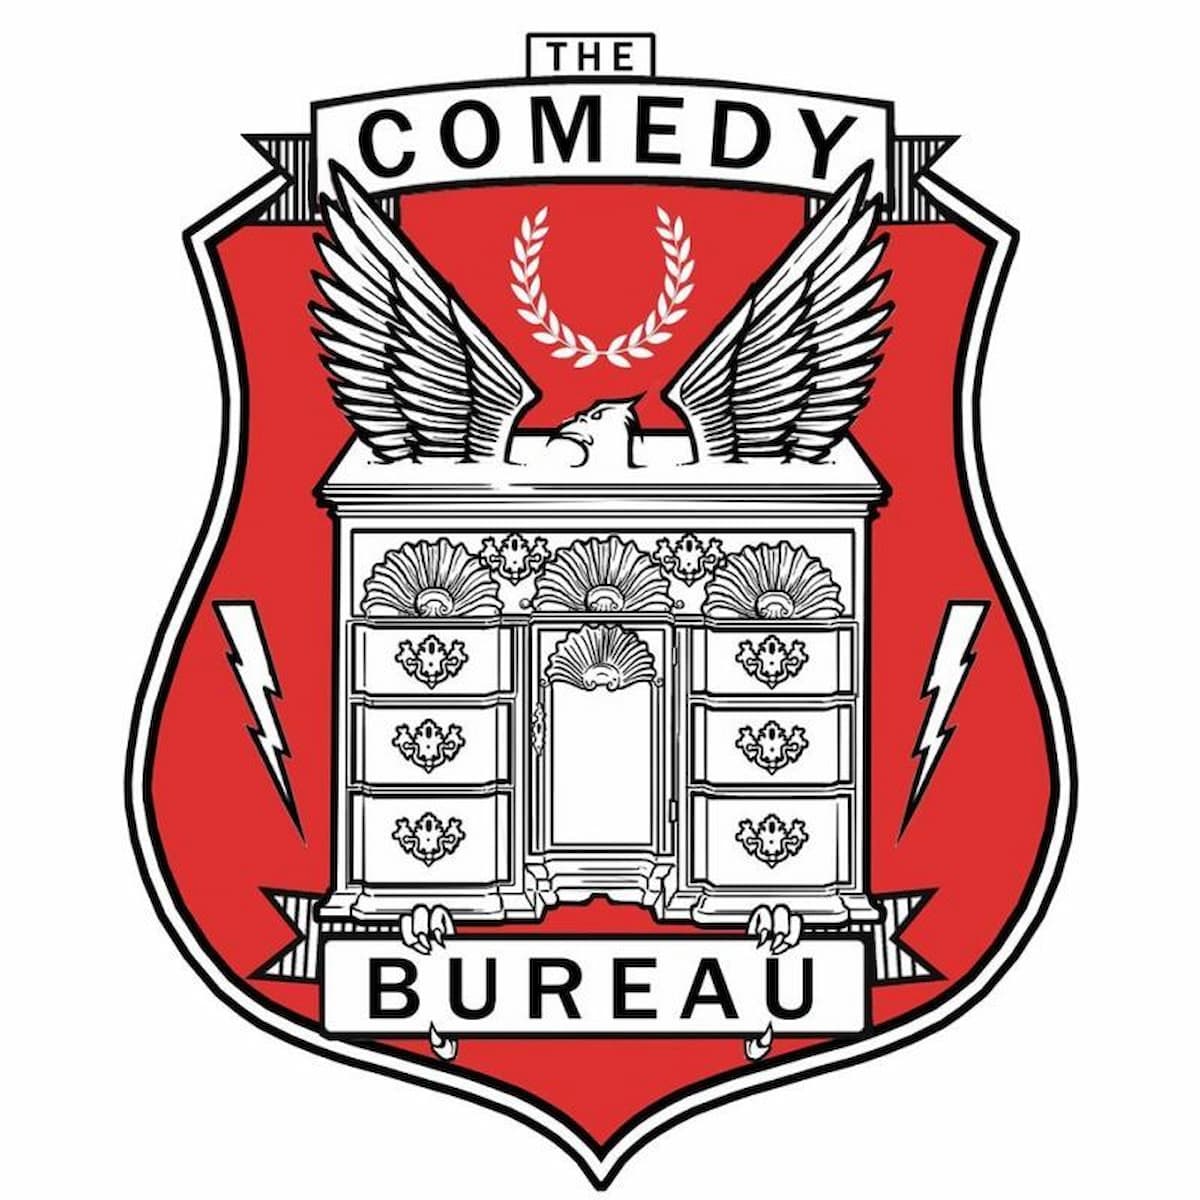 The Comedy Bureau